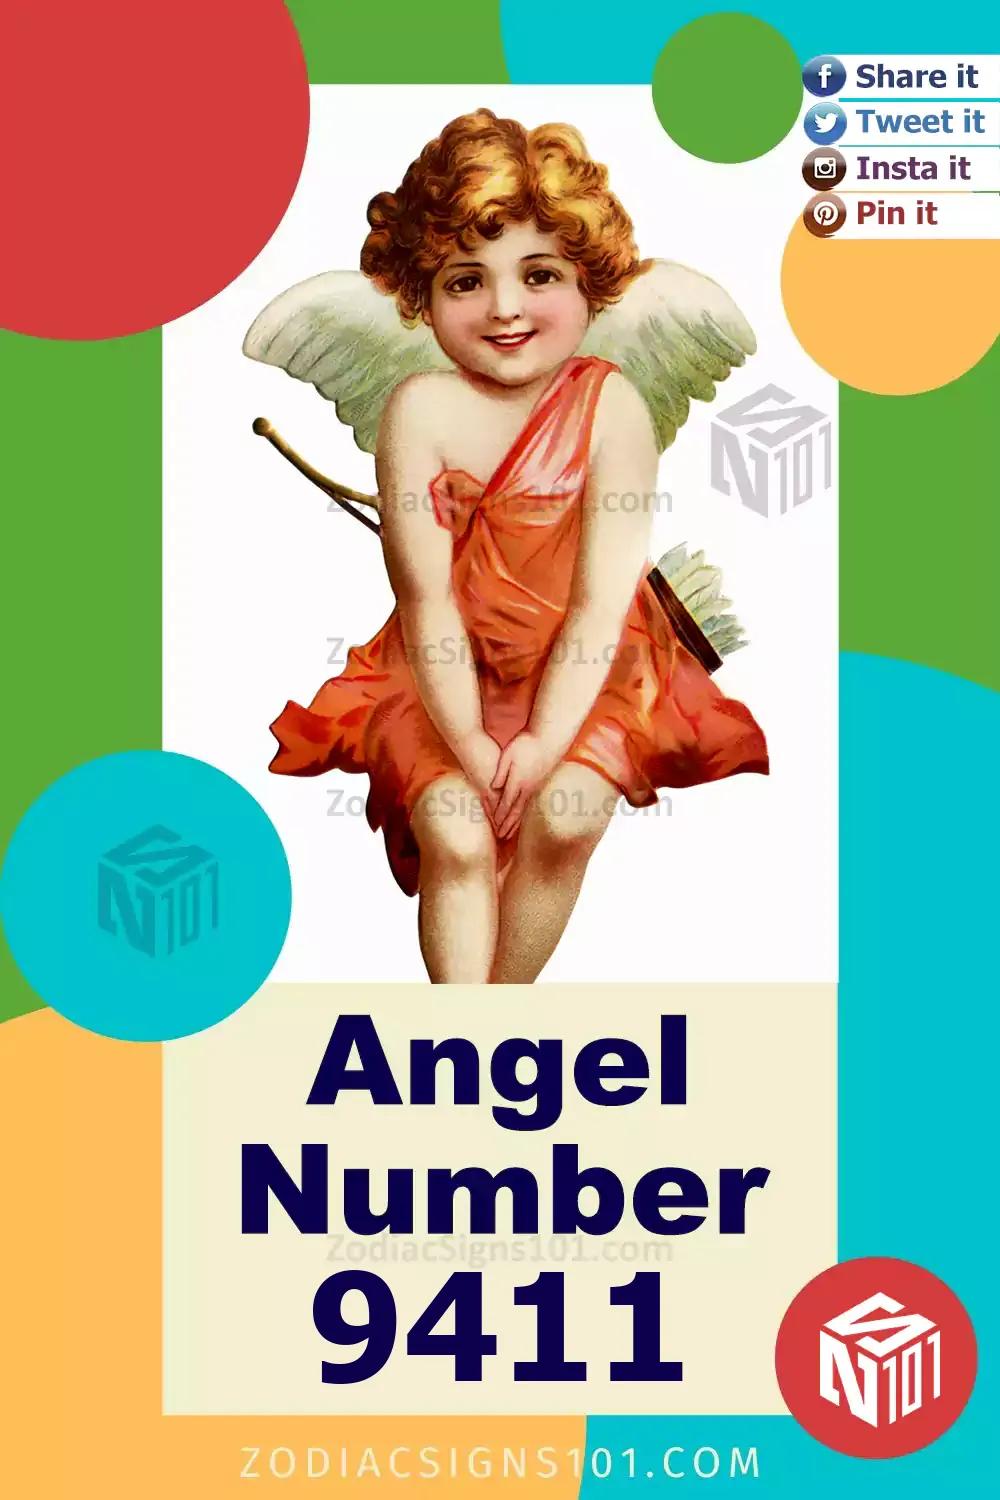 9411-Angel-Number-Meaning.jpg